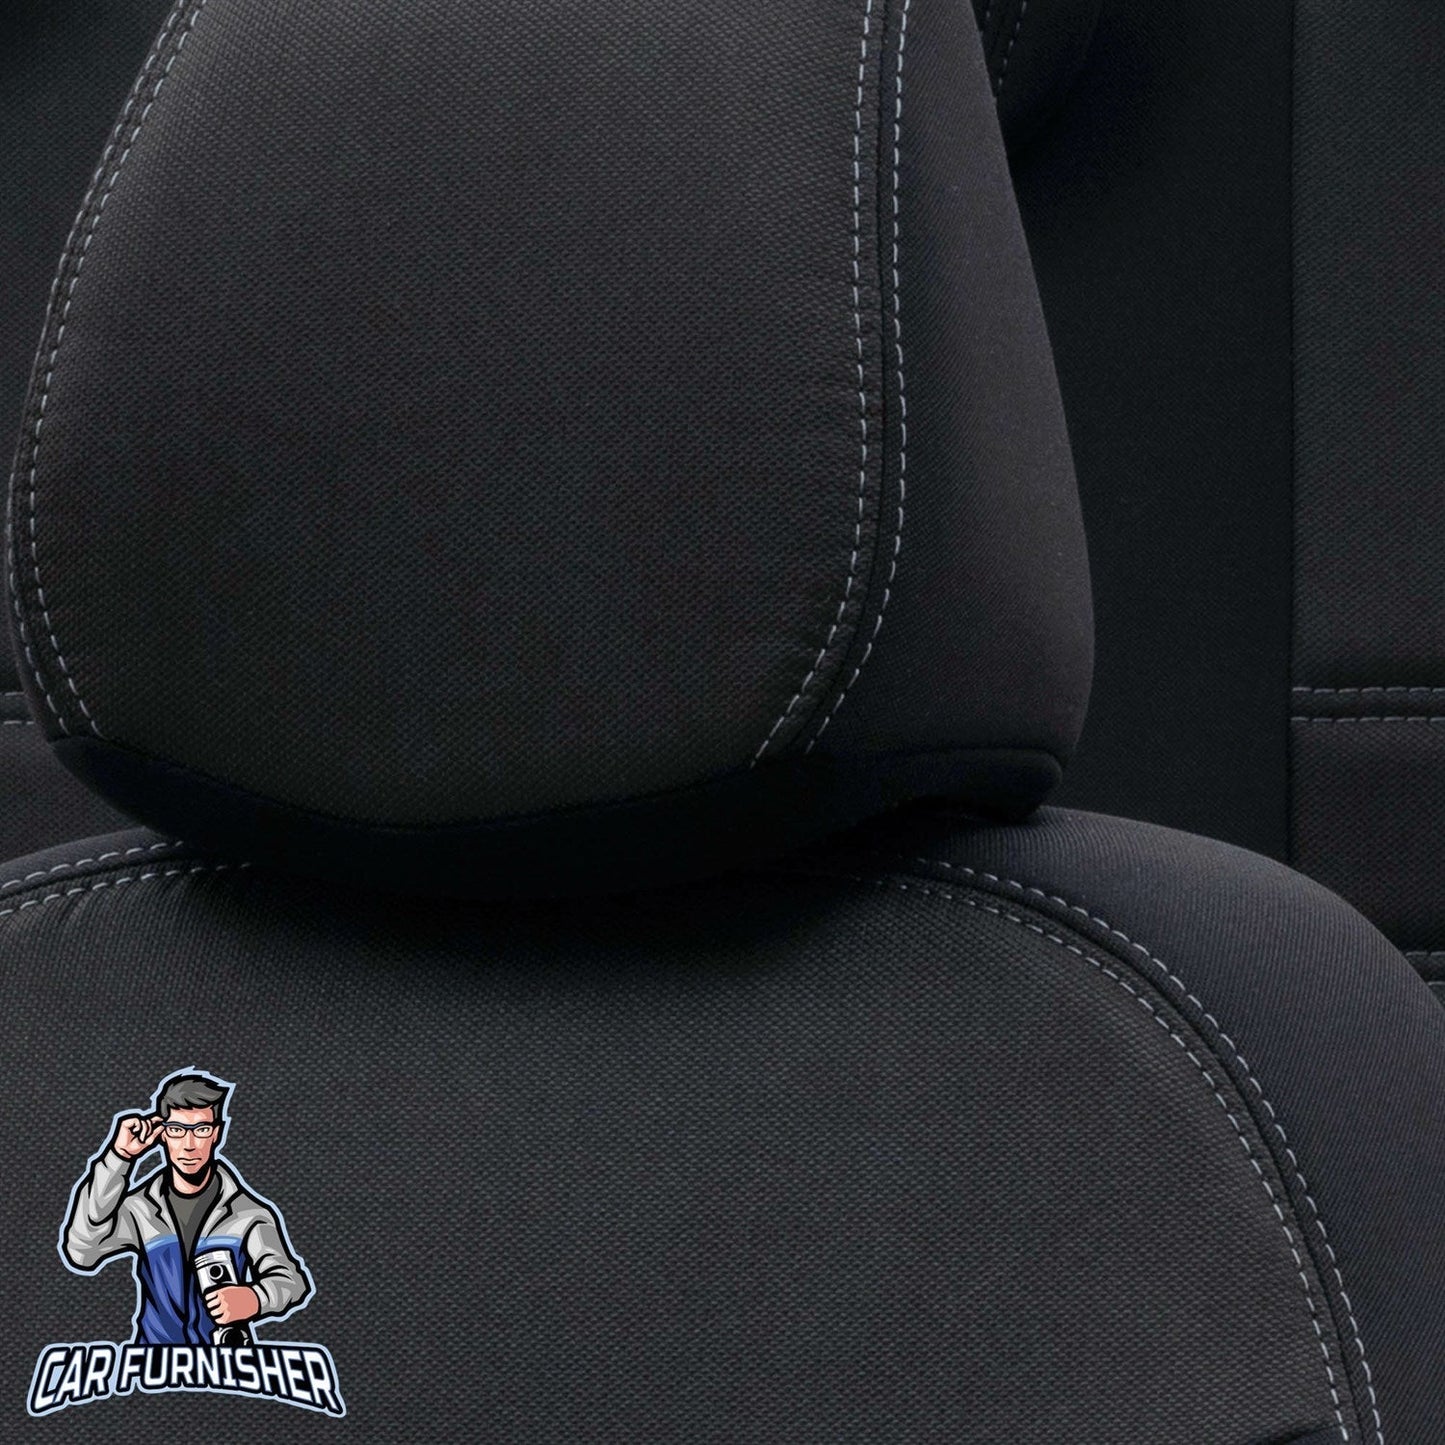 Renault Megane Seat Covers Original Jacquard Design Black Jacquard Fabric